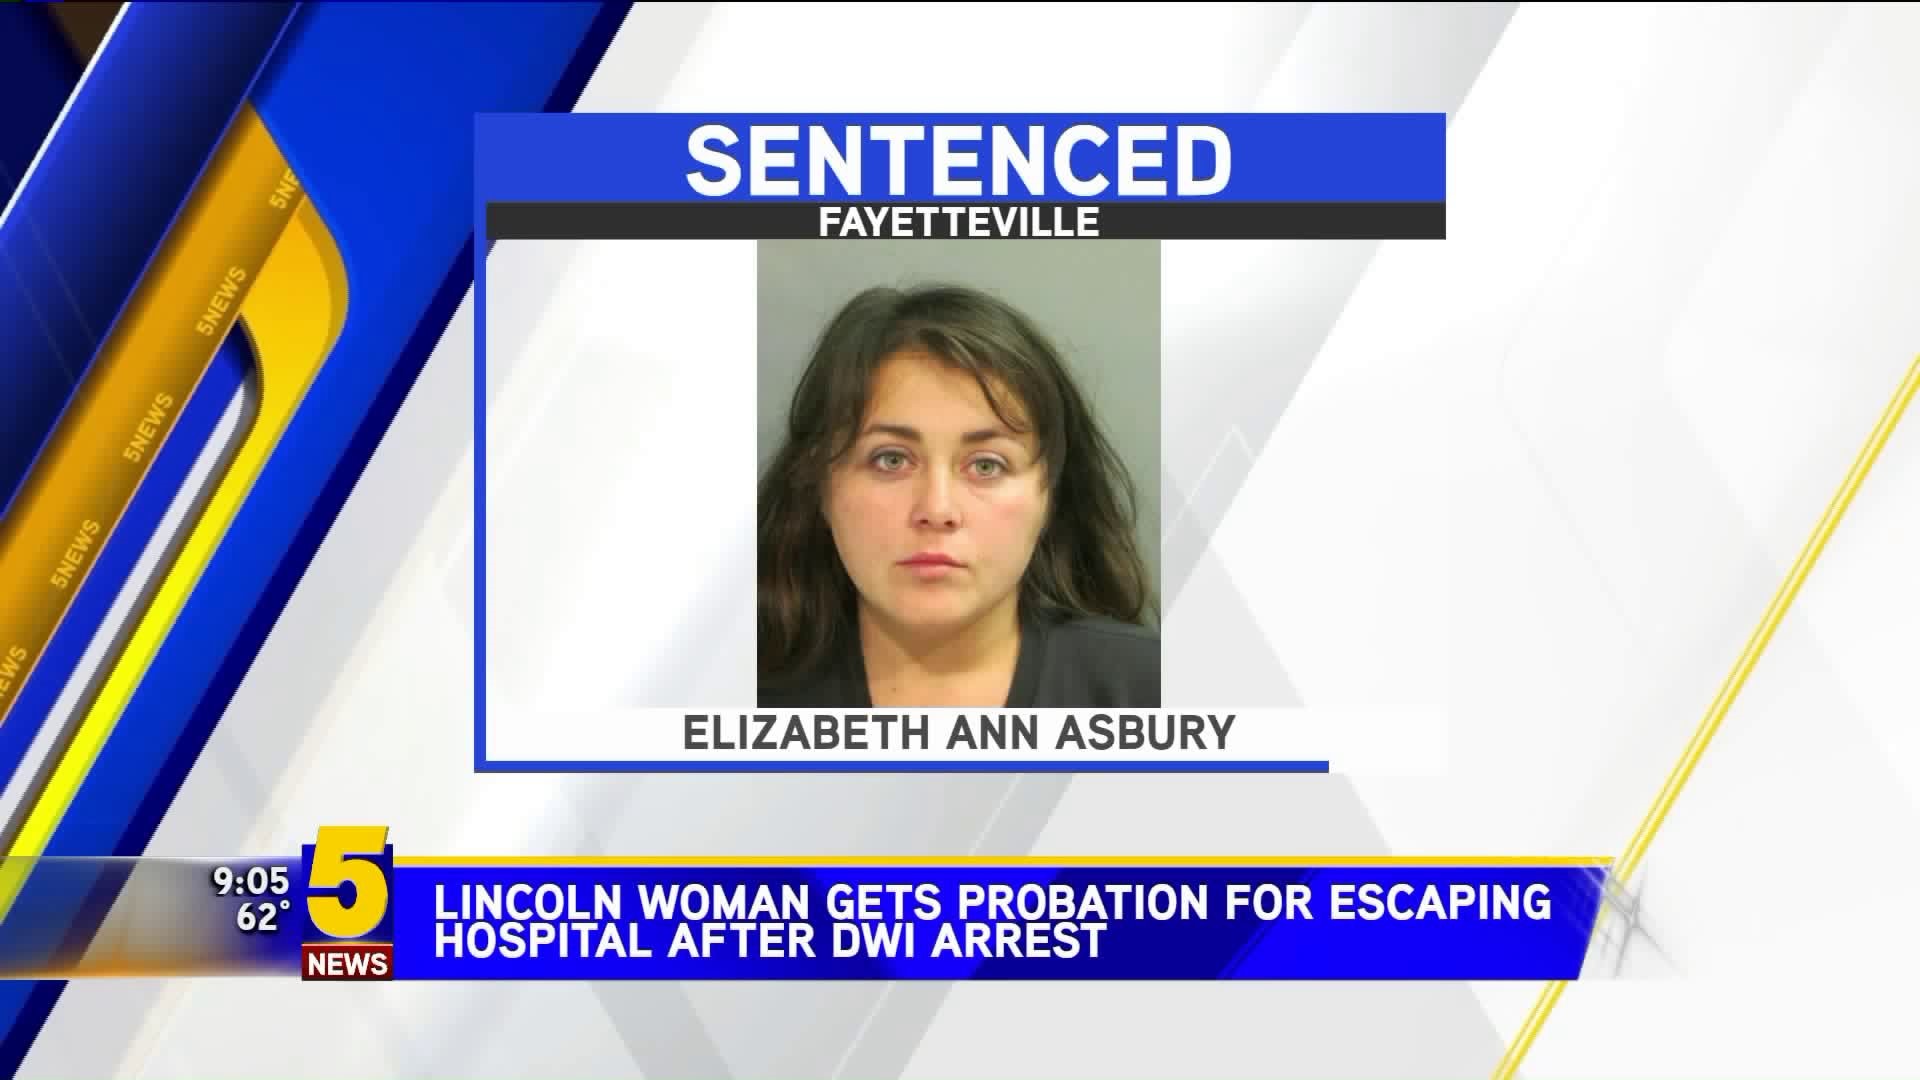 Lincoln Woman Sentenced